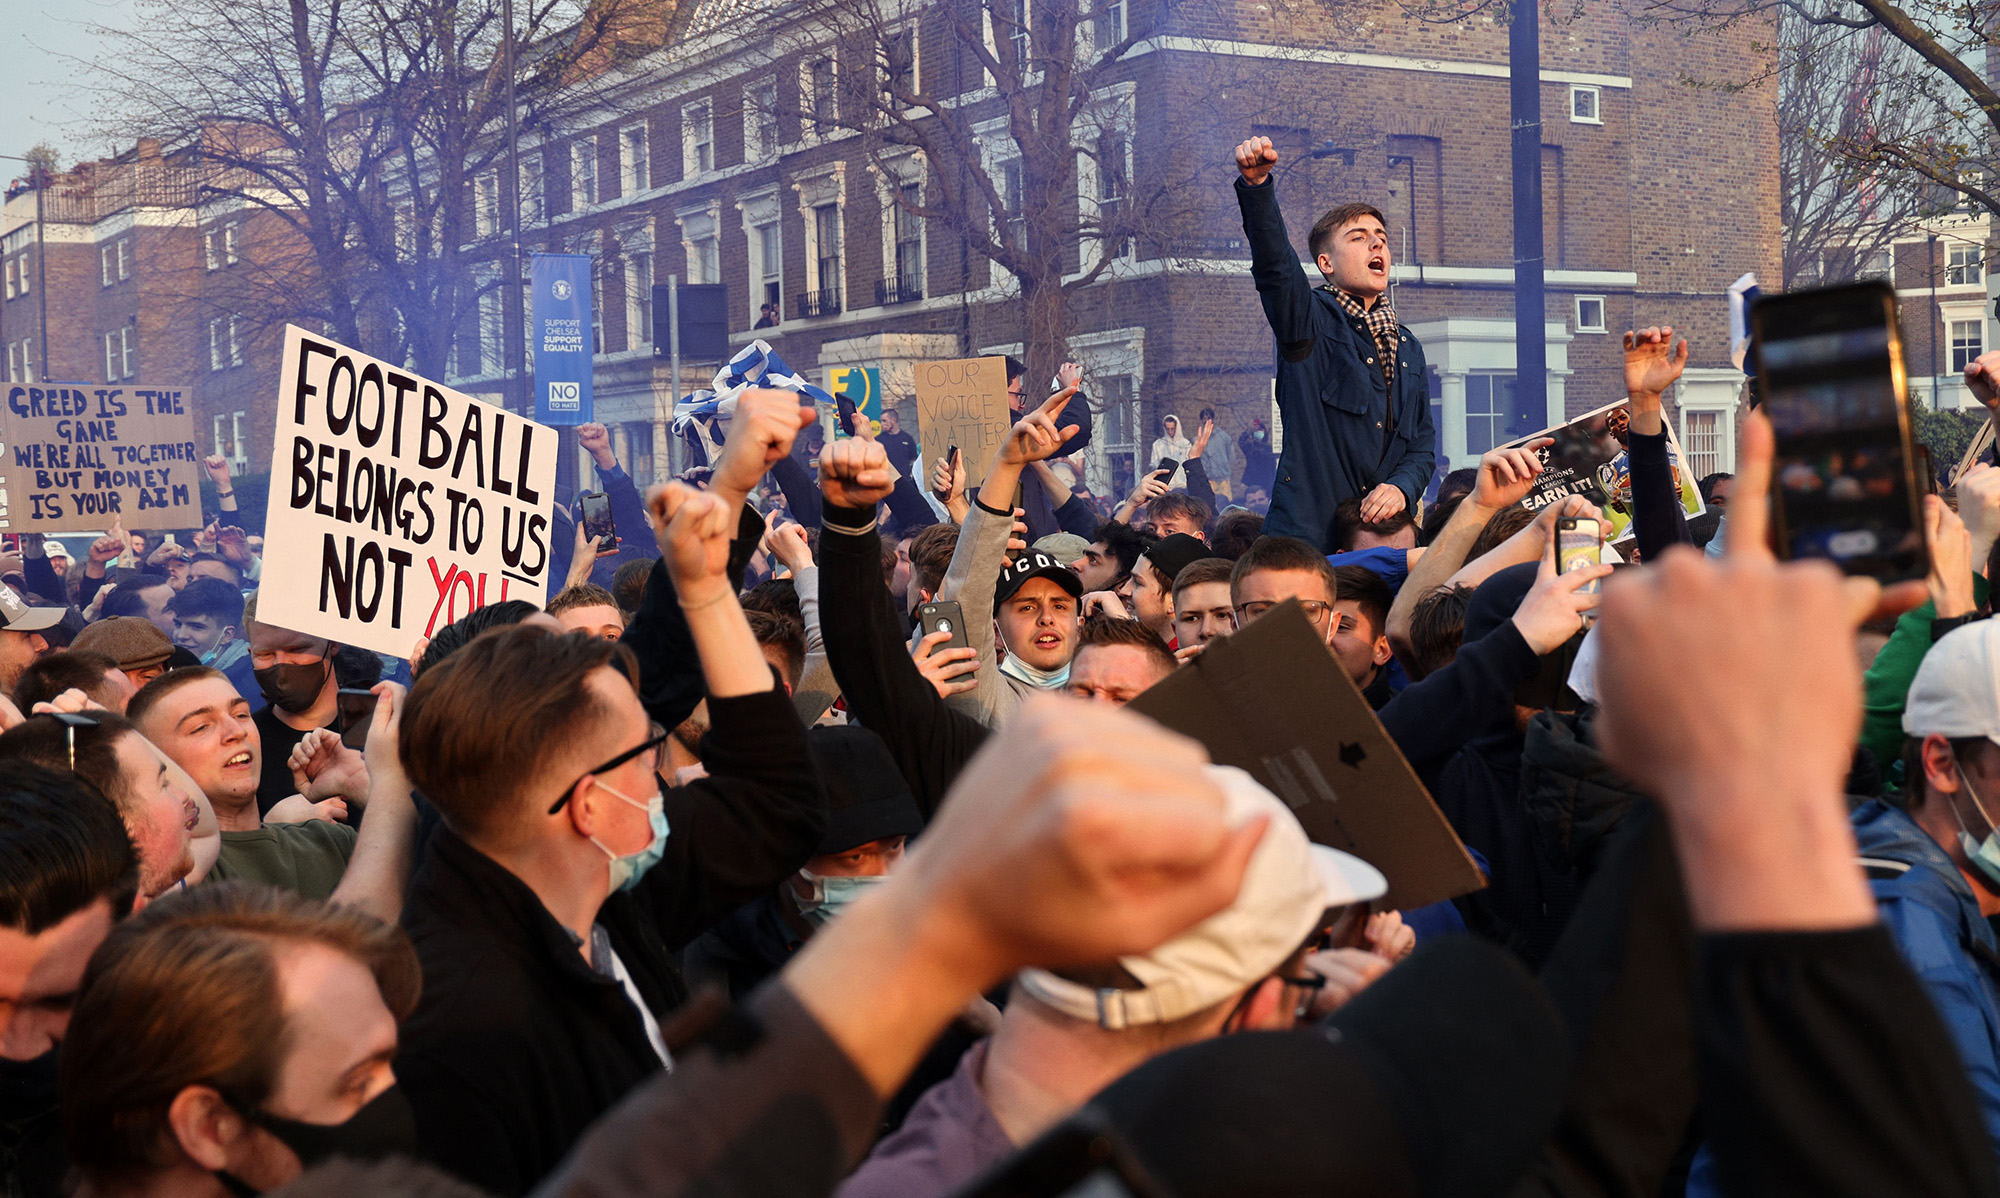 Demonstrators gather outside Stamford Bridge football stadium in London on April 20.